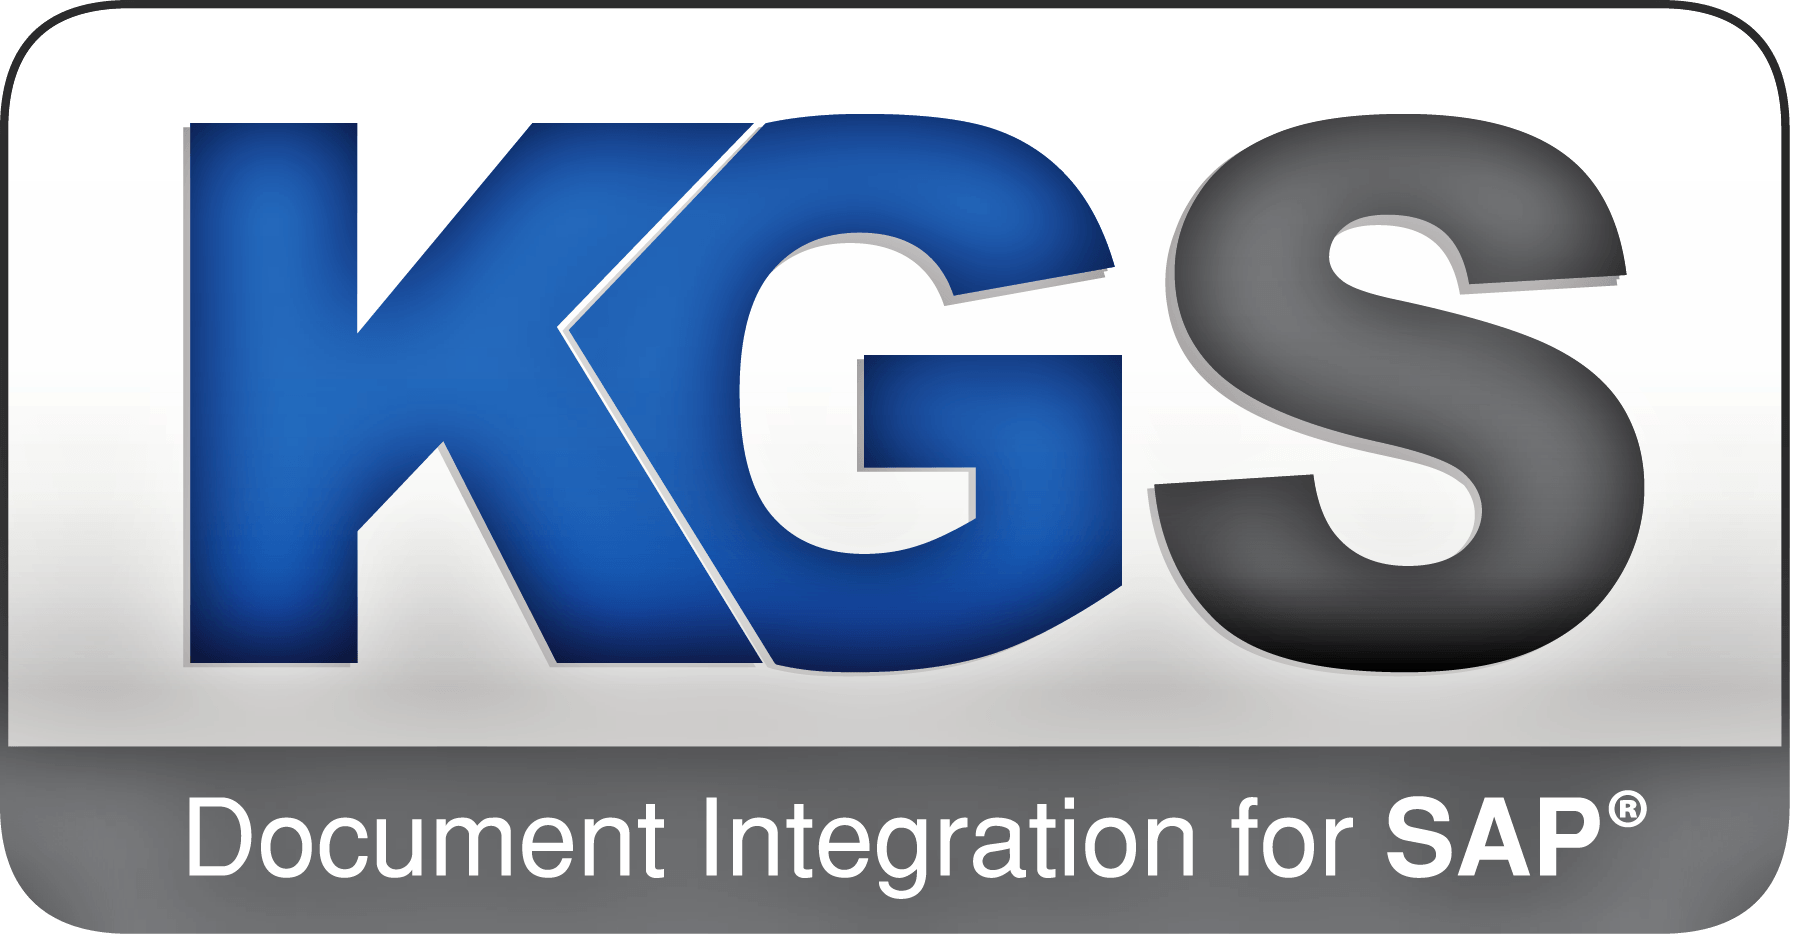 Kgs Logo - File:KGS Logo.png - Wikimedia Commons